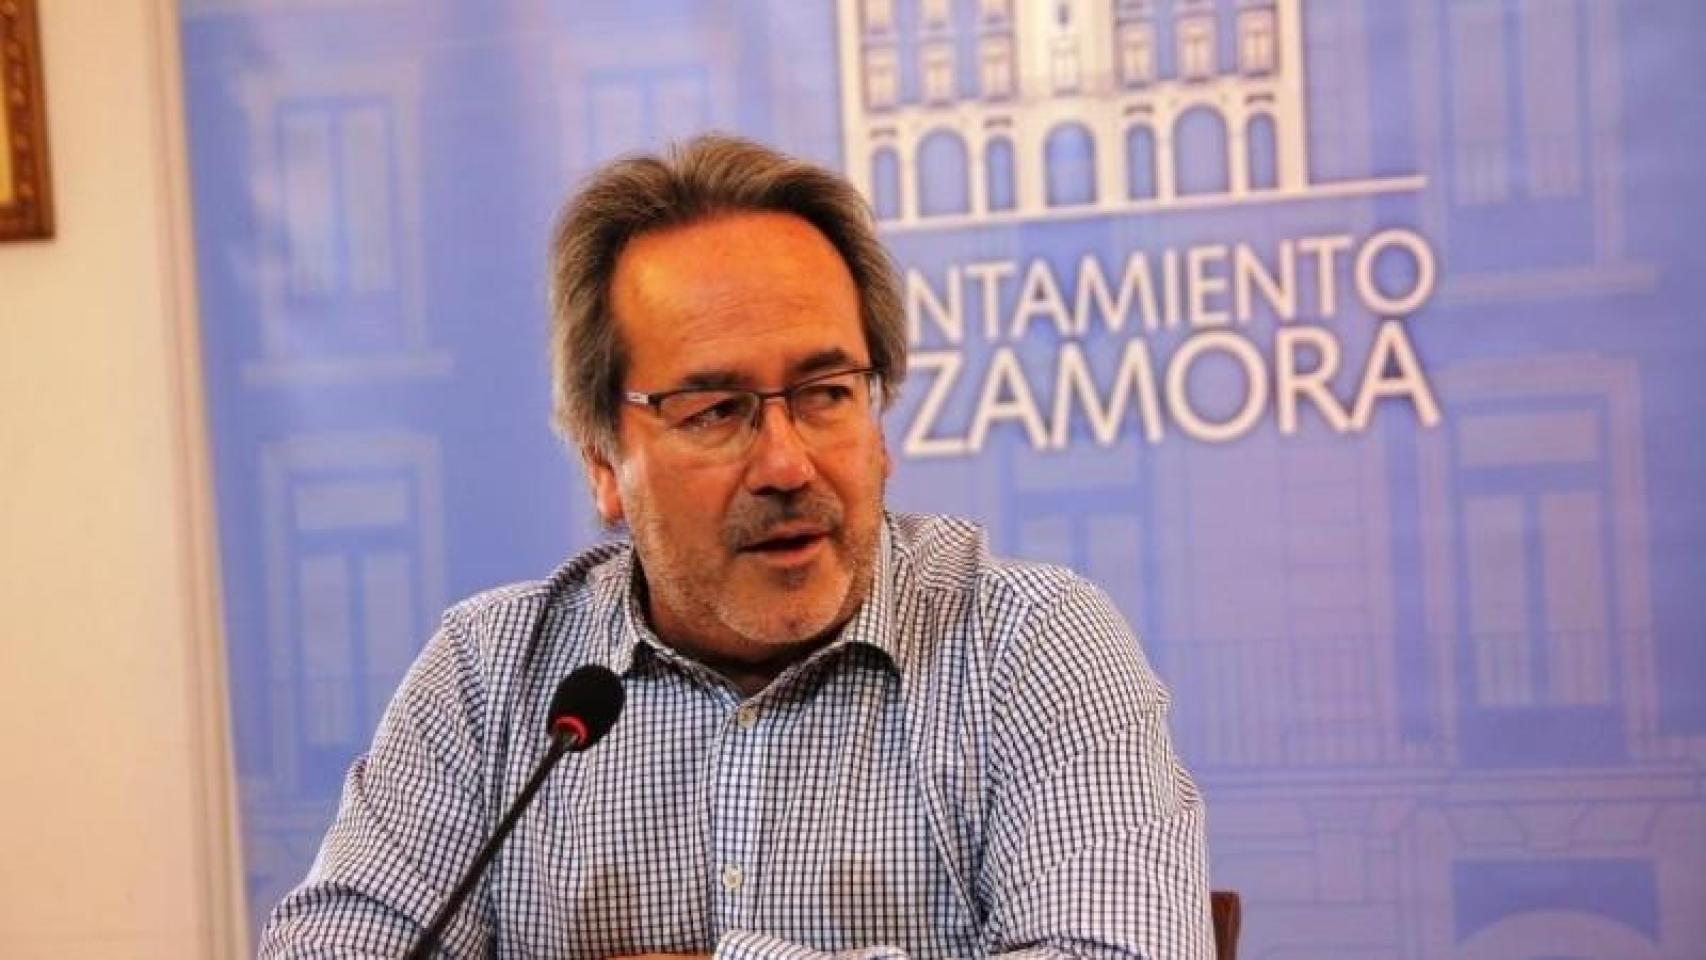 El regidor de Zamora de IU, Francisco Guarido.